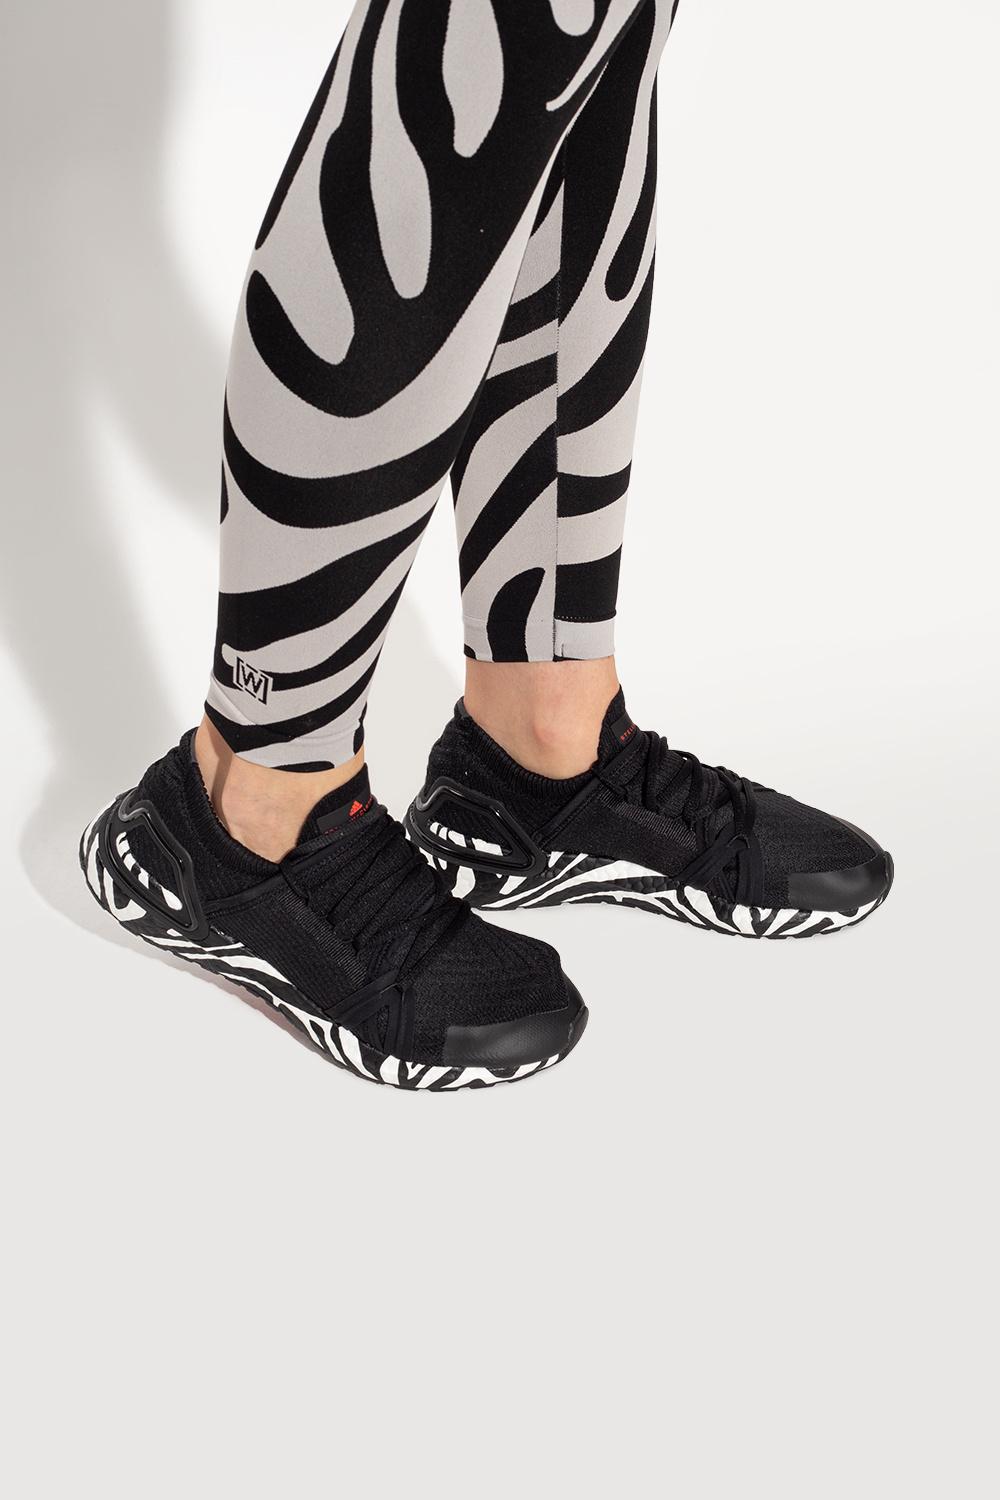 adidas by Stella McCartney Women's Asmc Ultraboost 20 Graphic Sneakers